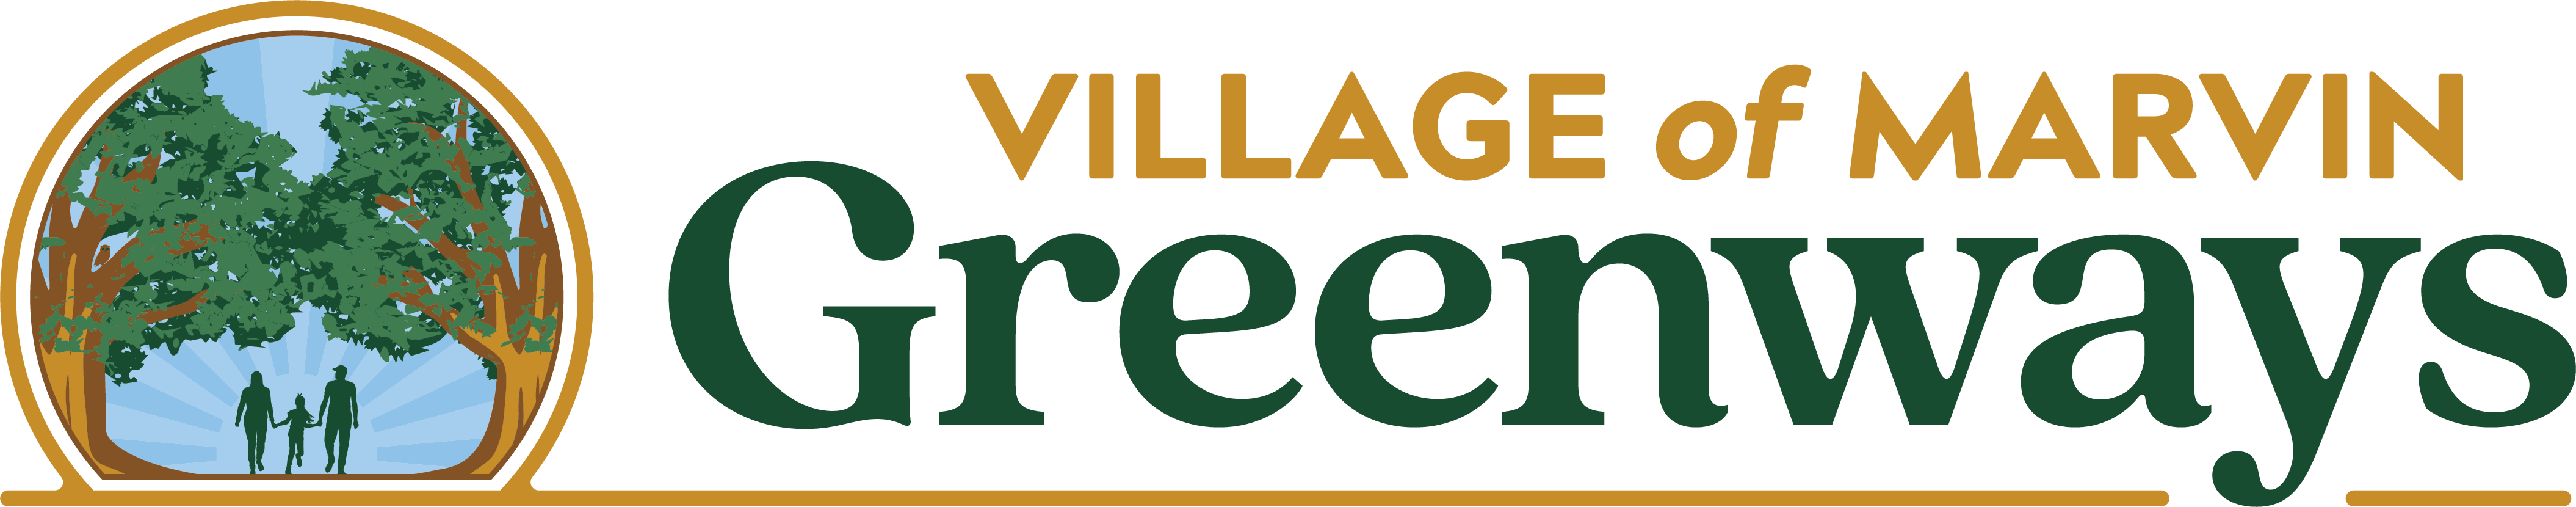 Greenways Logo